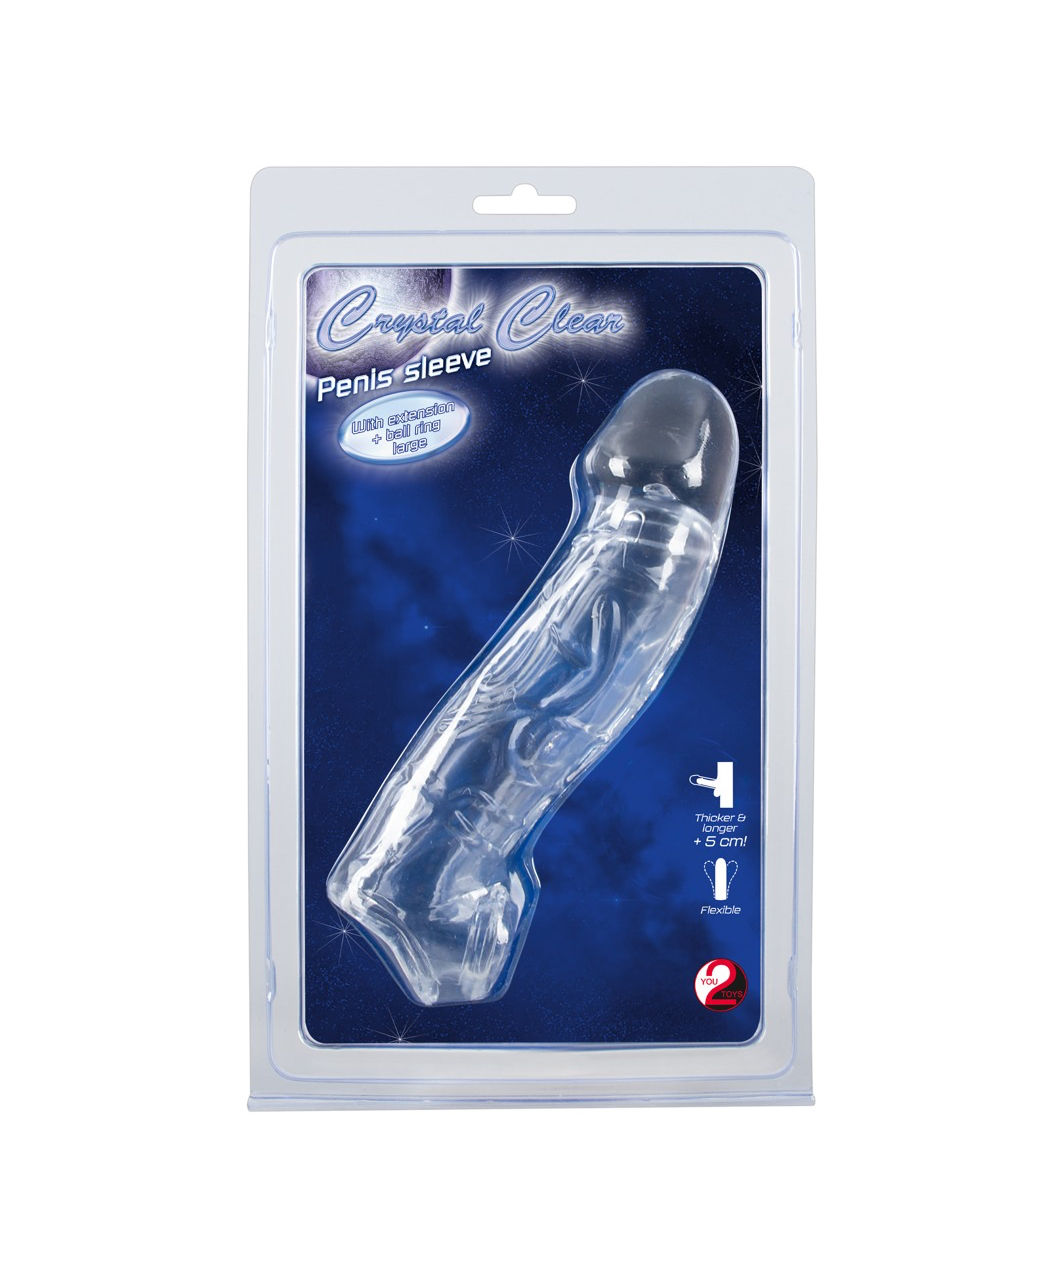 Crystal Clear Extending Penis Sleeve